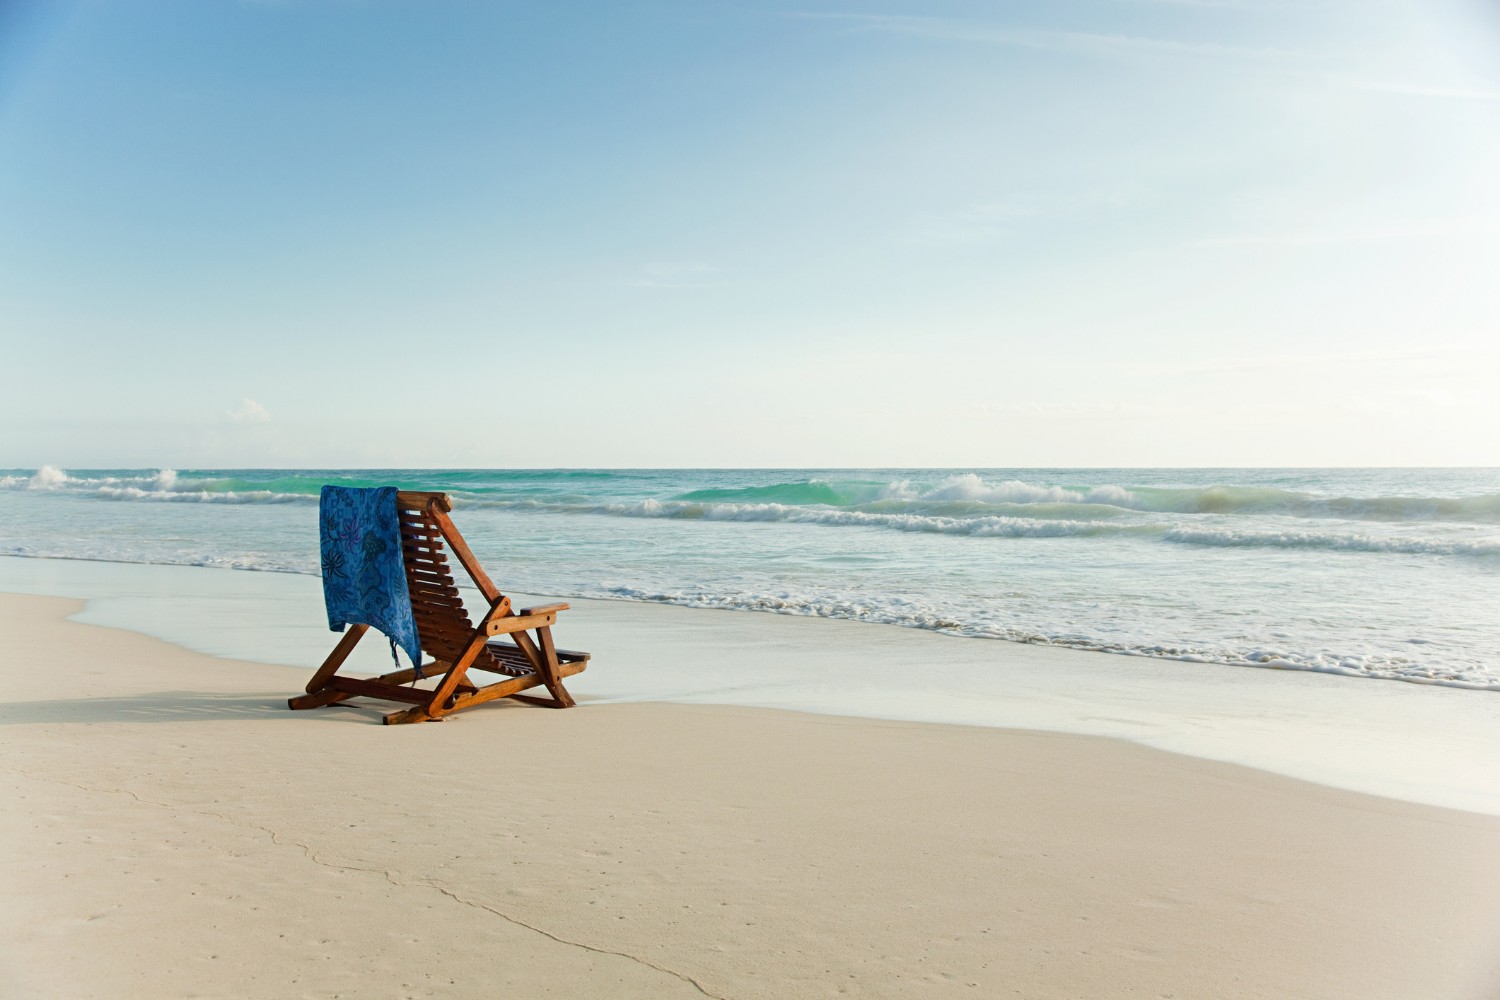 Beach chair on a lonesome beach in 30A